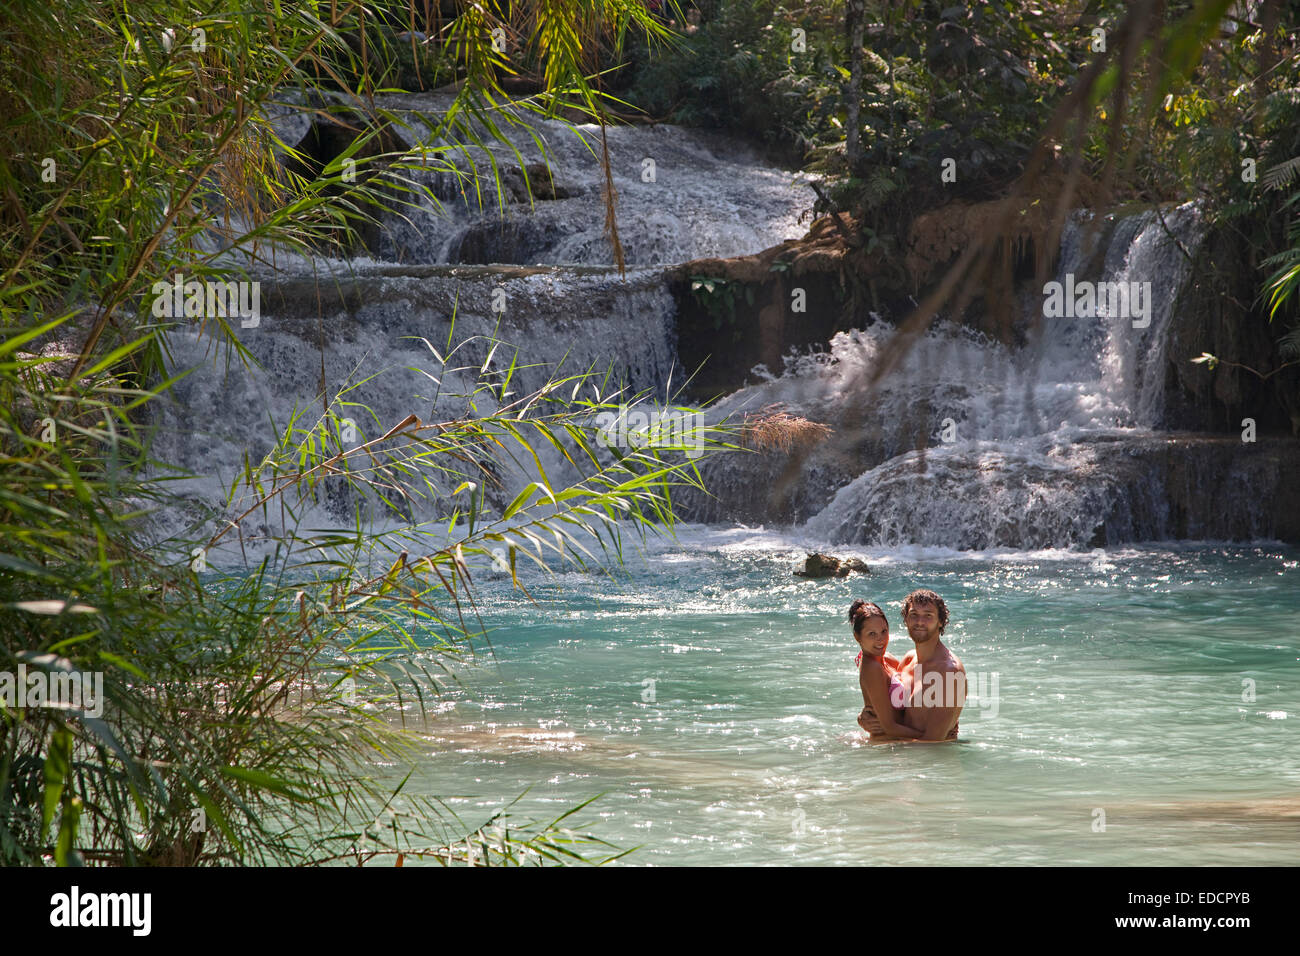 Romantic couple in turquoise blue pool of the Kuang Si Falls / Kuang Xi / Tat Kuang Si Waterfalls near Luang Prabang, Laos Stock Photo